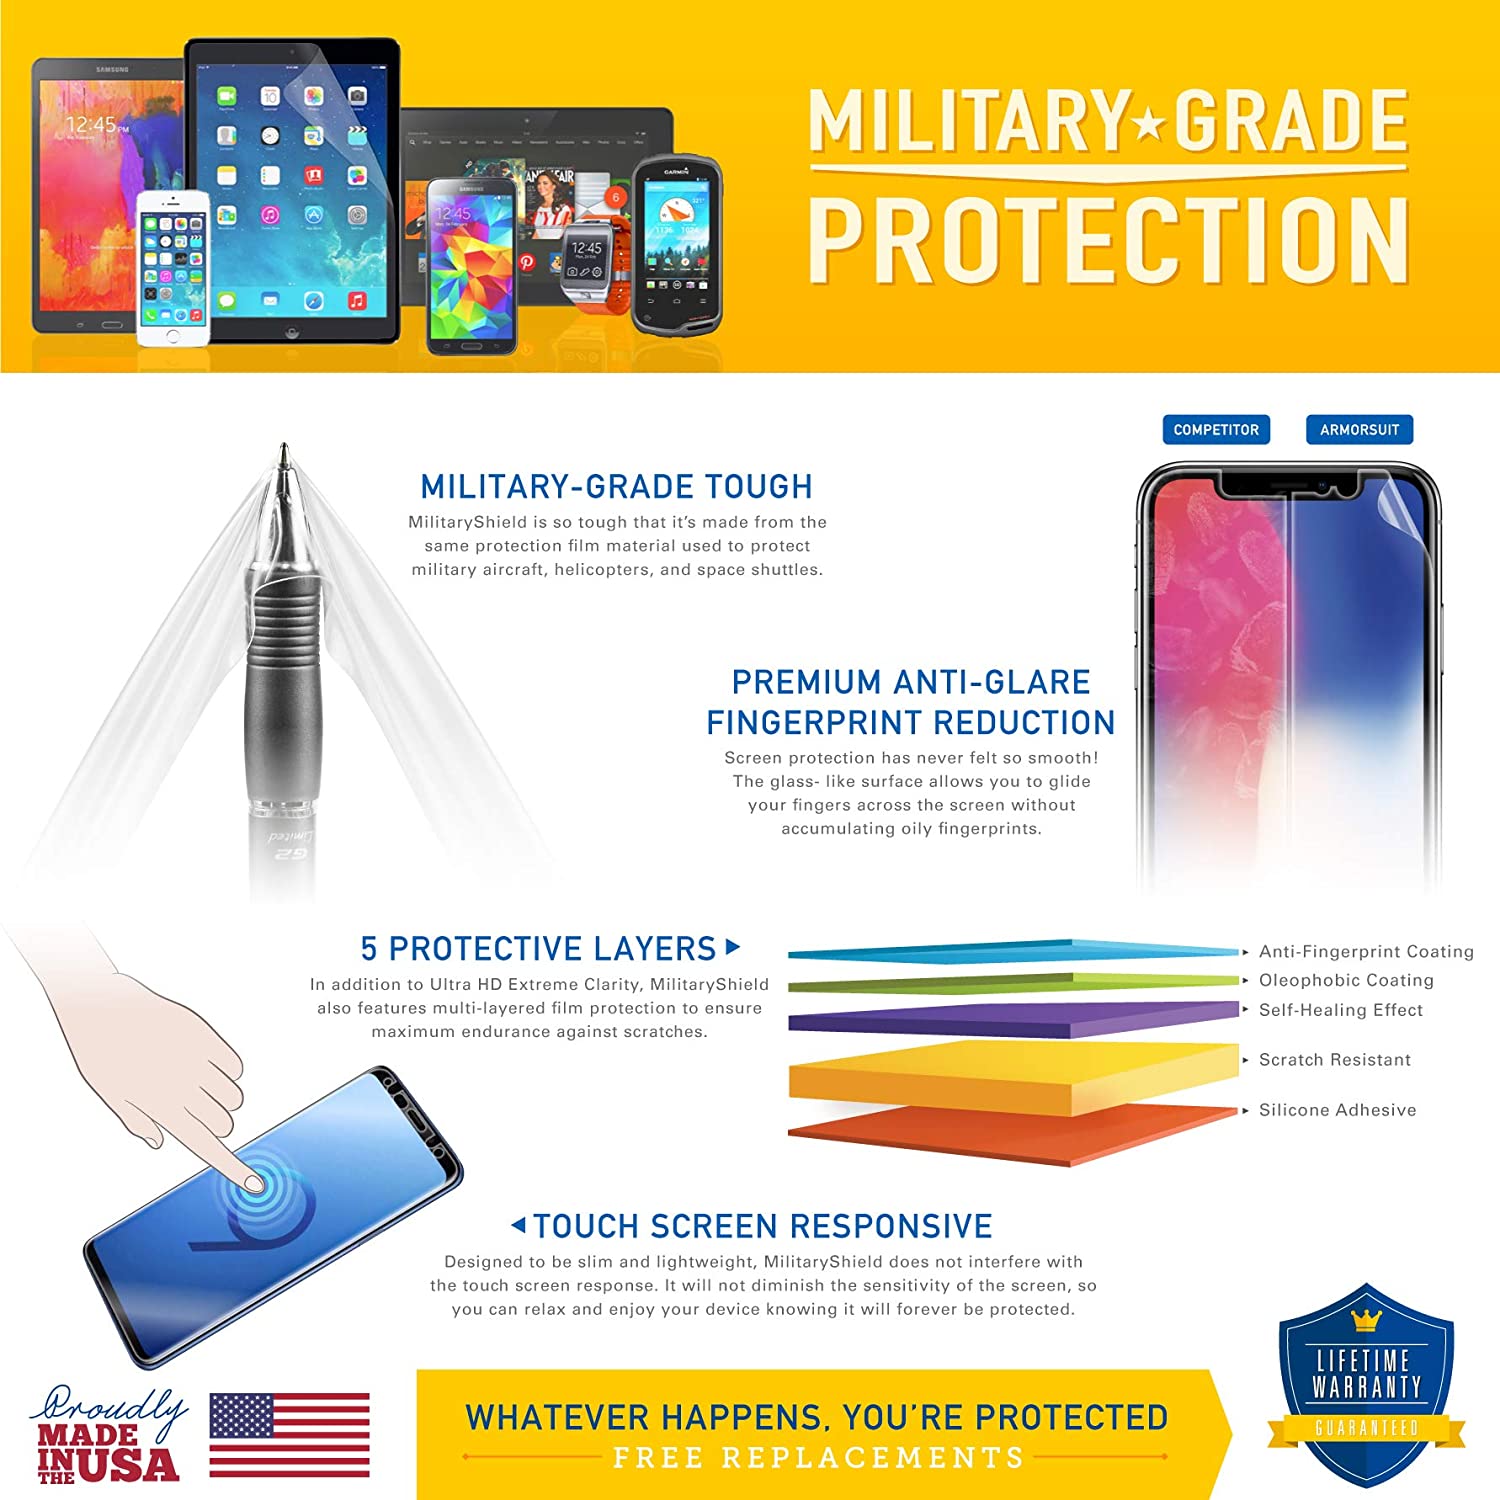 [2 Pack] Motorola Moto Z2 Force Case-Friendly Screen Protector